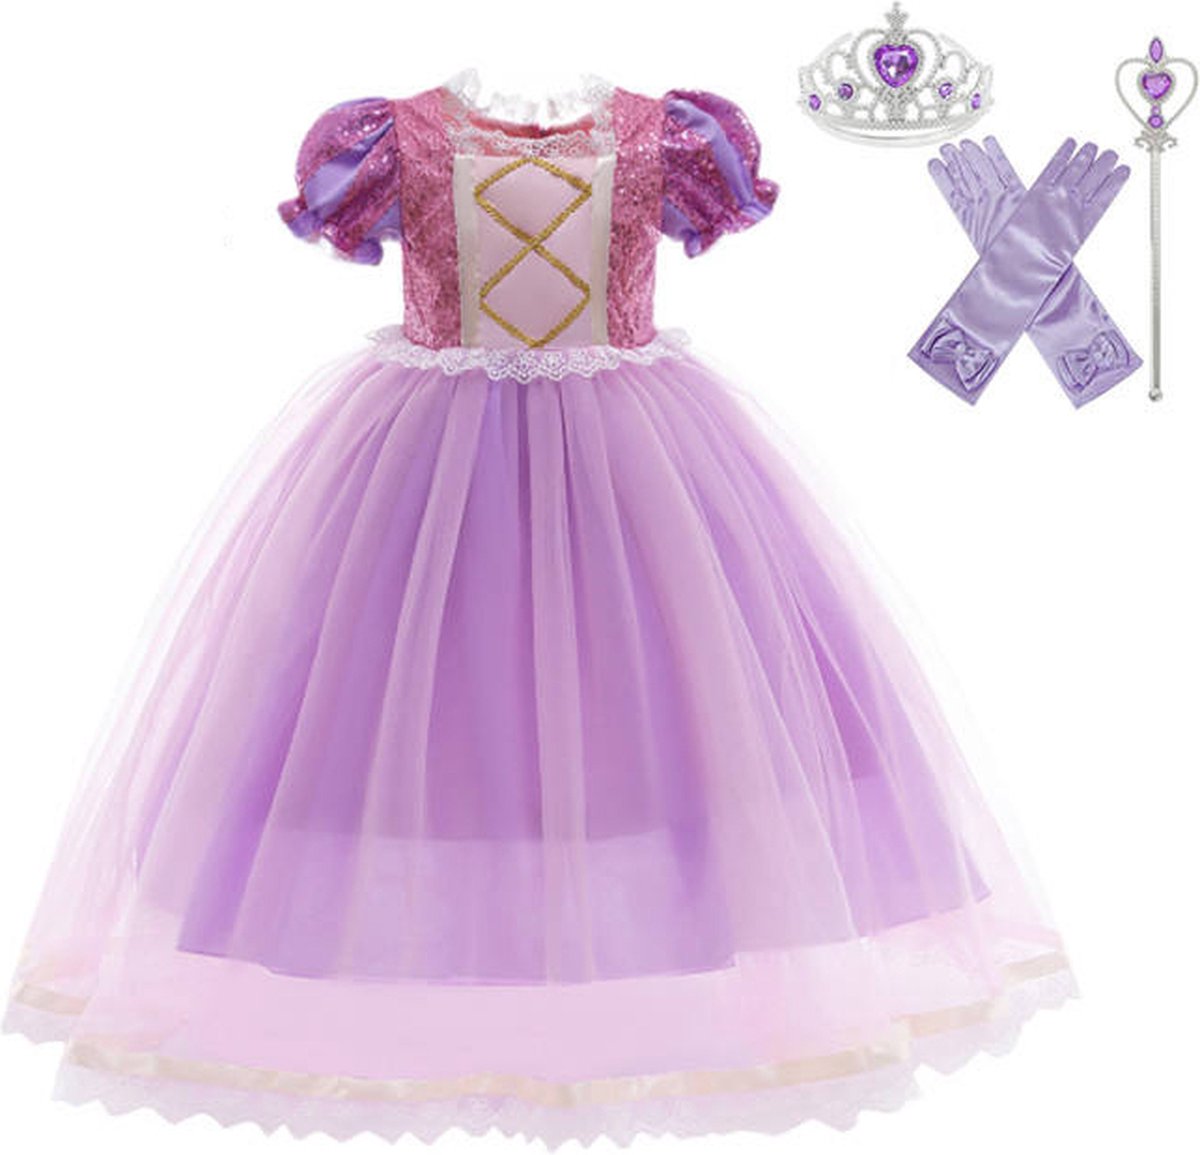 Joya Kids® Rapunzel Prinsessenjurk meisje | Verkleedjurken meisjes | Rapunzel jurk Roze en Paars | Met Kroon en Toverstaf | maat 104/110(110)